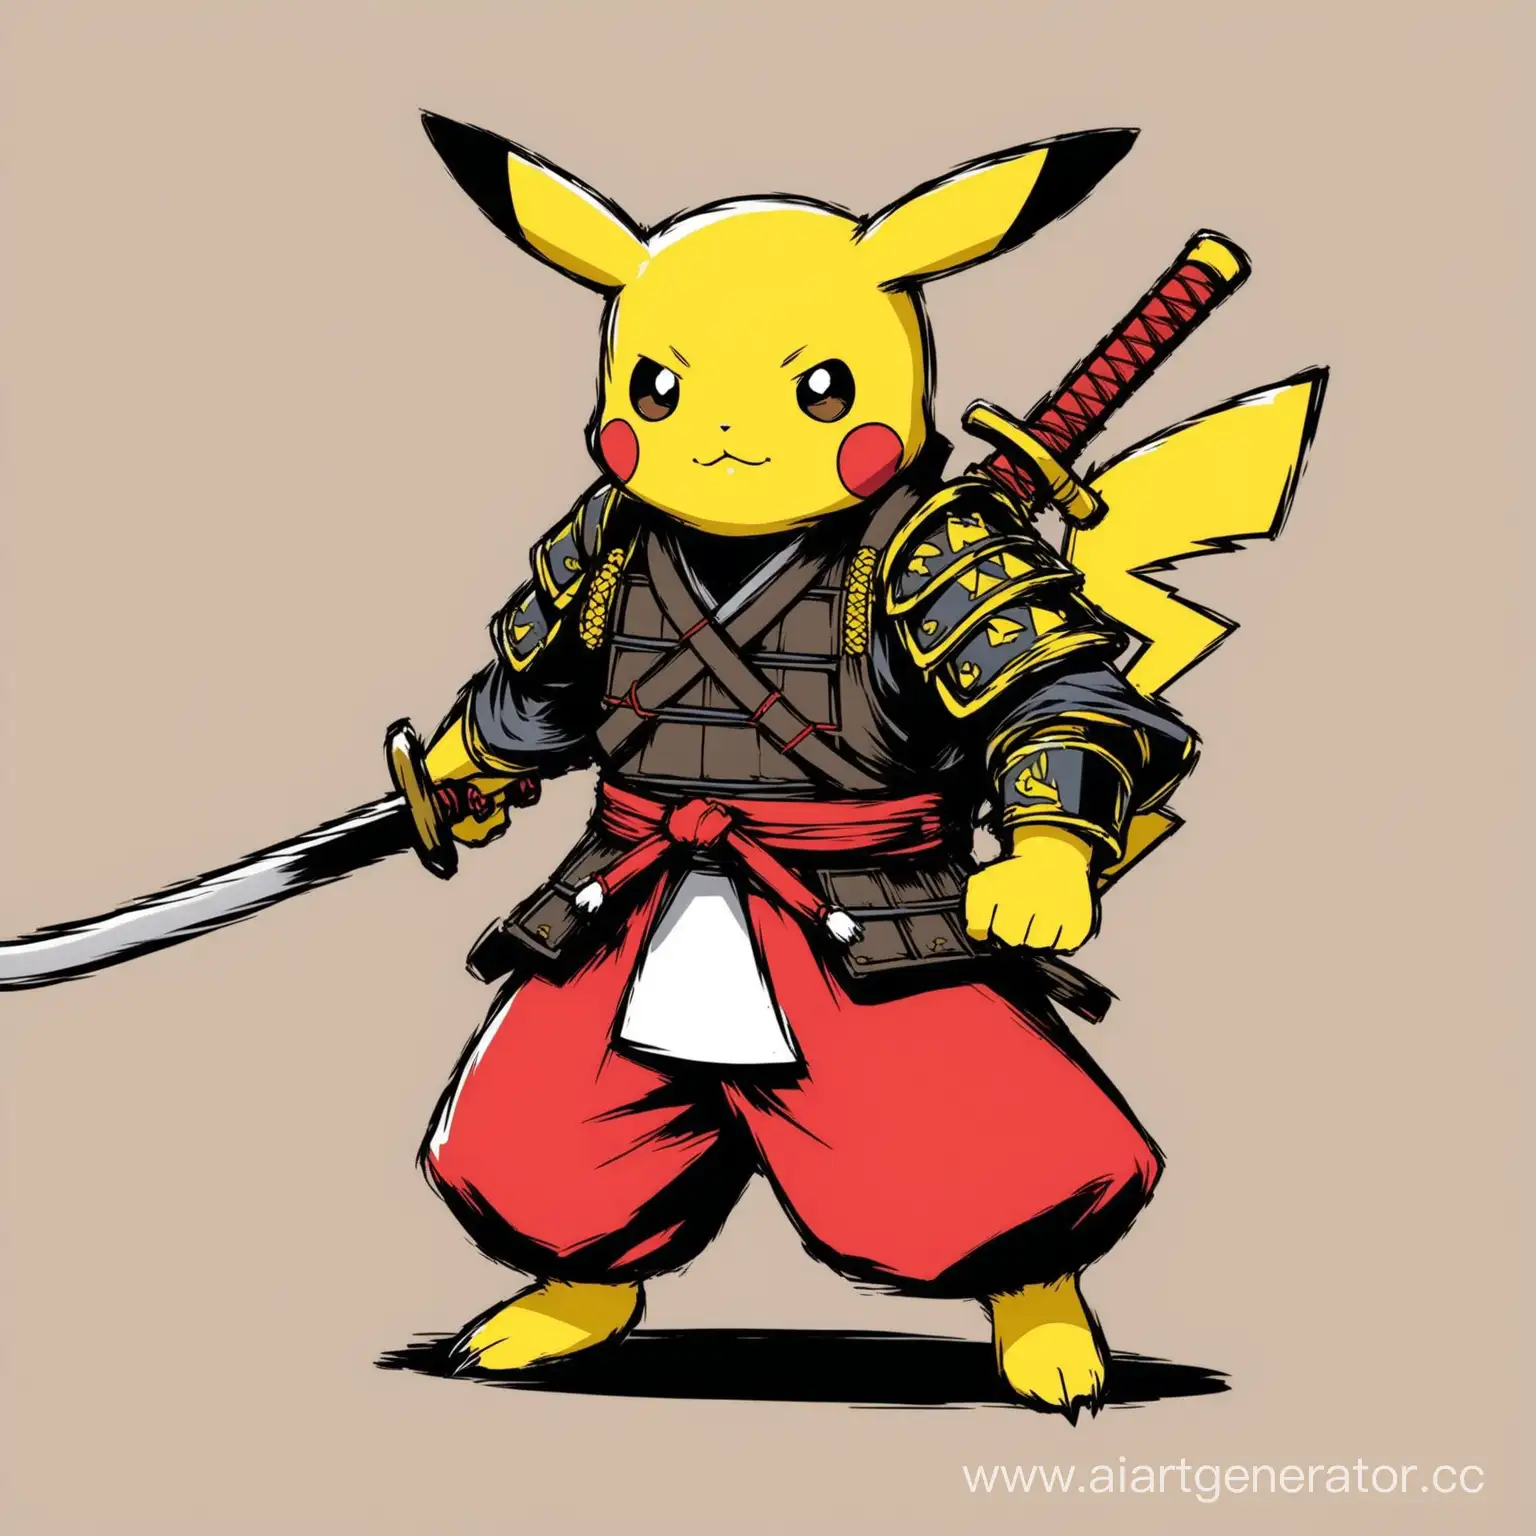 Electric-Samurai-Pikachu-Ready-for-Battle